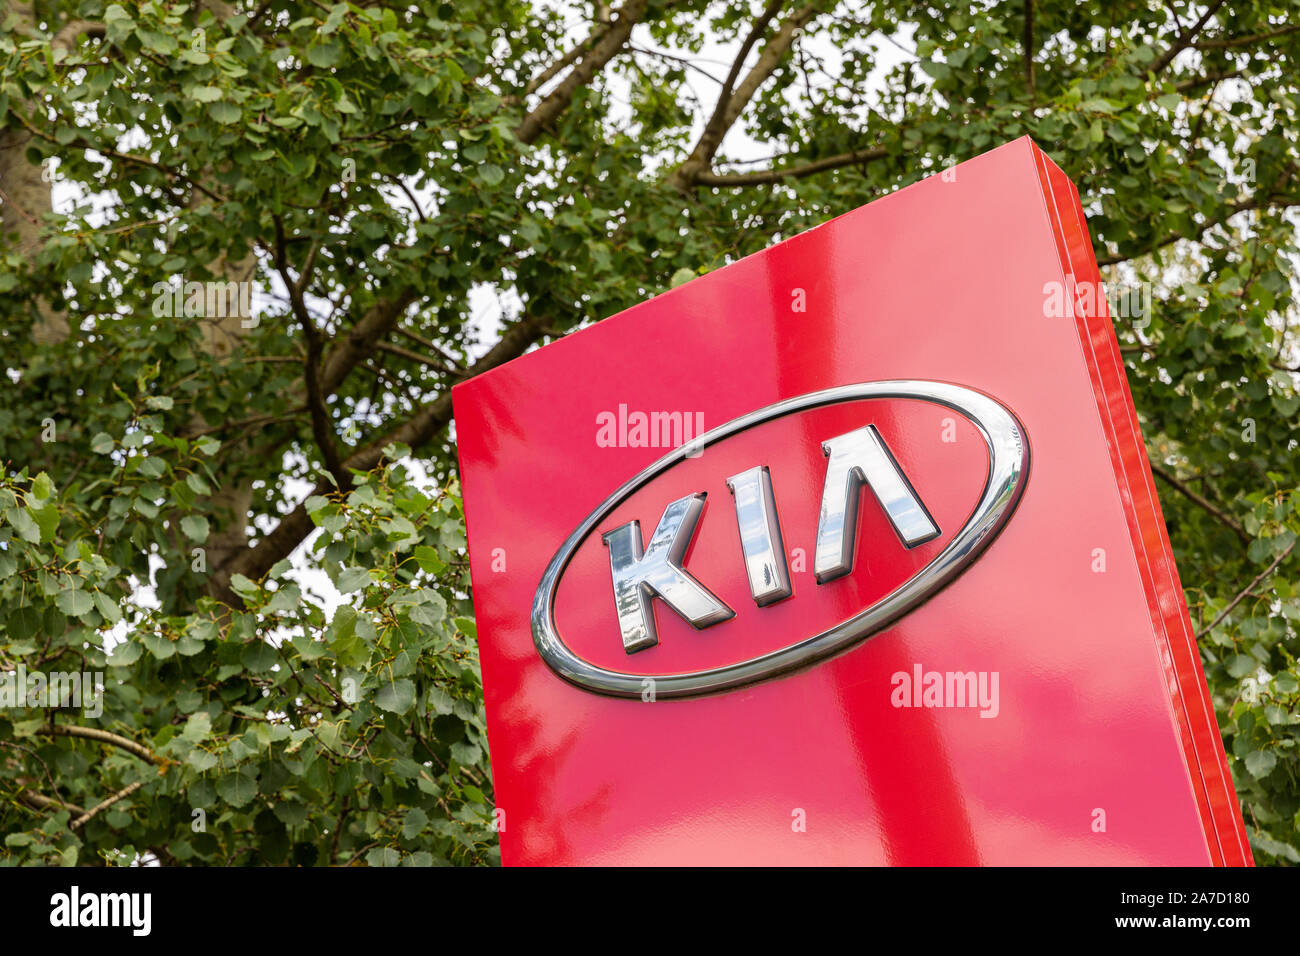 Minsk, Belarus - July 15, 2019: KIA logo Kia dealership sign against green leaves on trees. Kia is South Korea's second-largest automobile Stock Photo